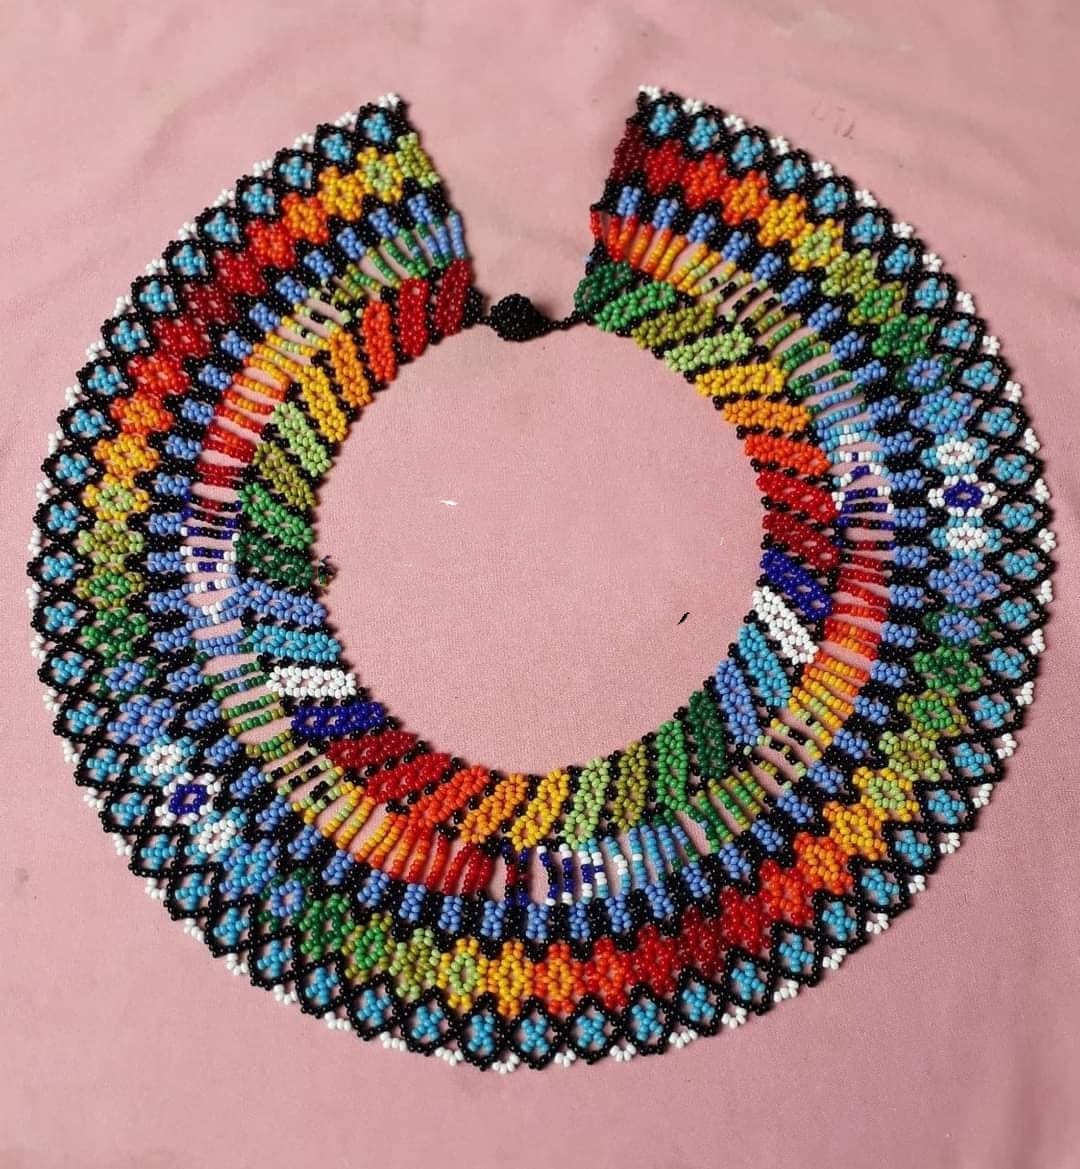 Huge Colorful Beaded Necklace Handmade by Ecuadorian Artisan Women